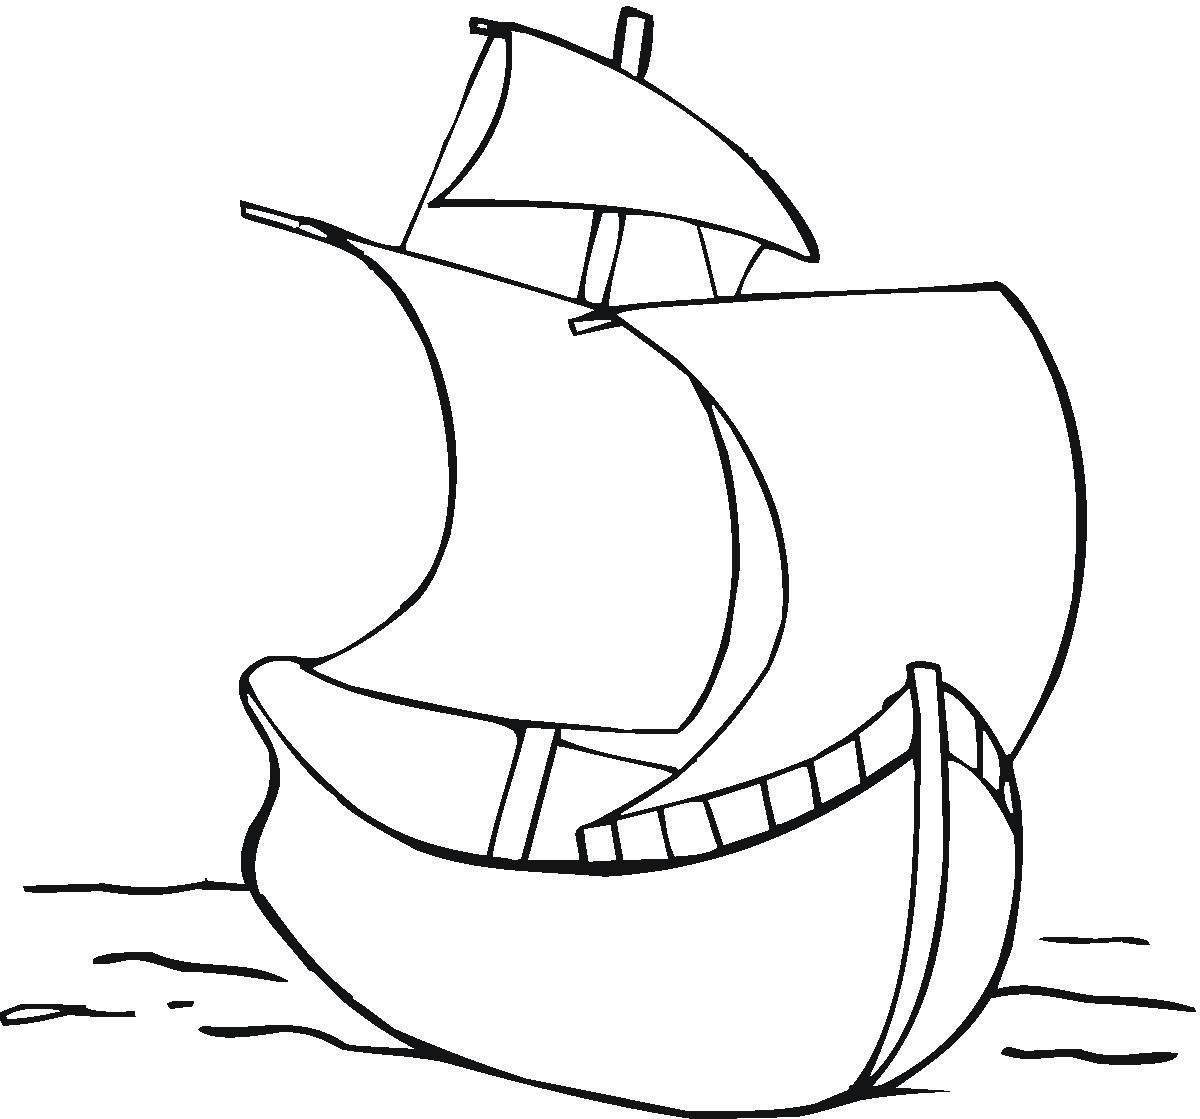 Joyful ship coloring page for kids